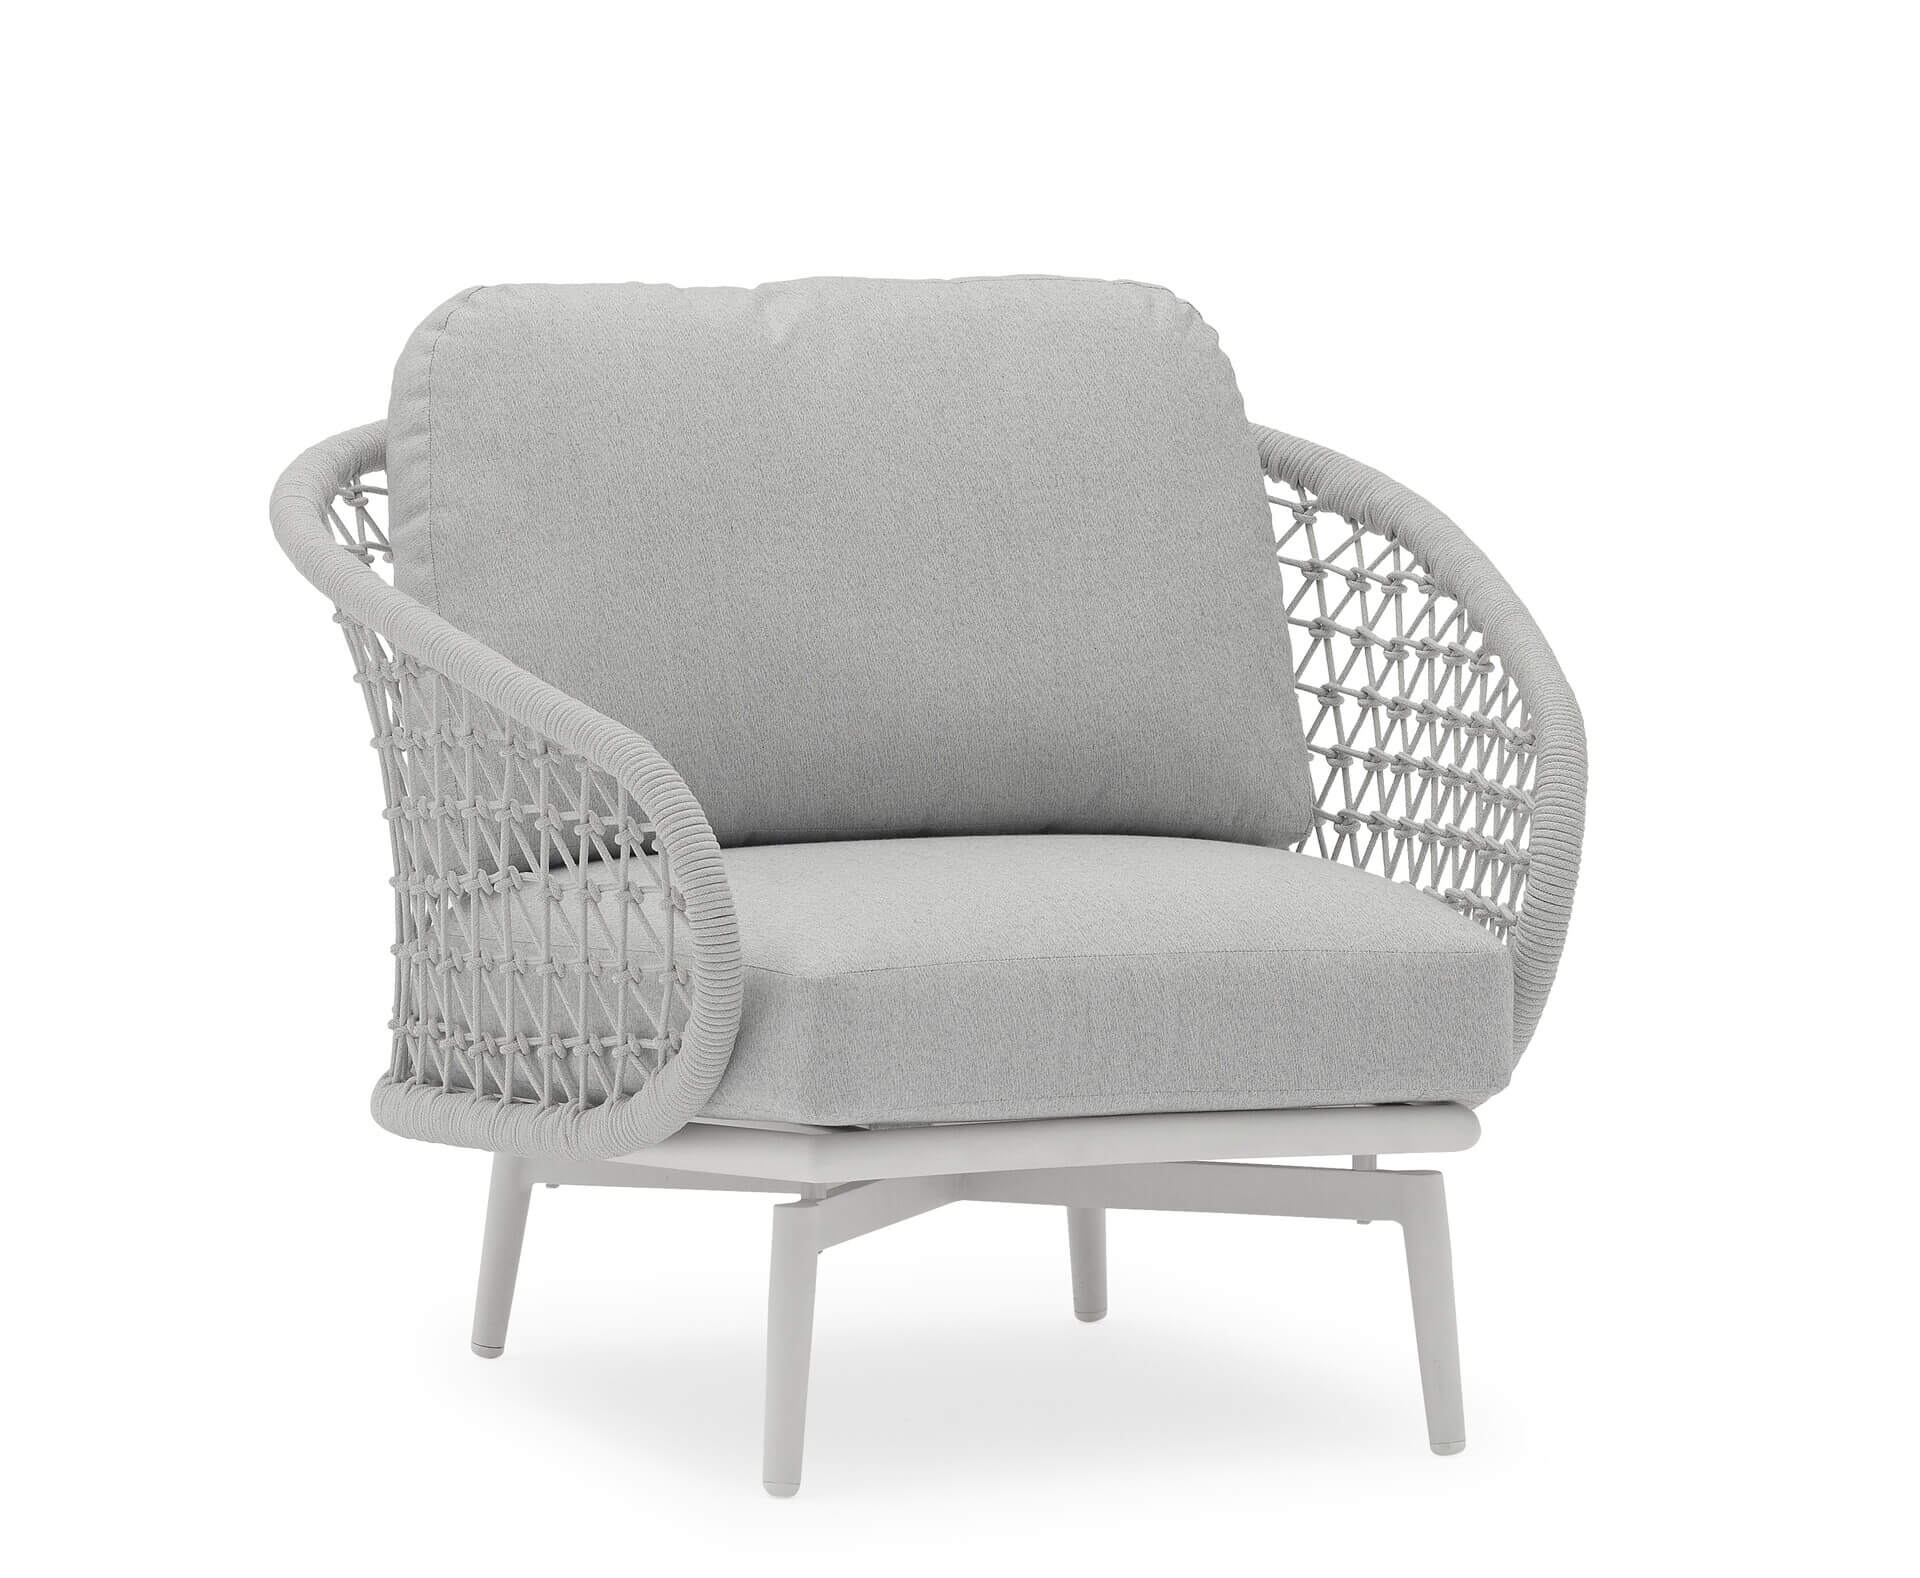 Verona Outdoor Lounge Chair - Light Grey